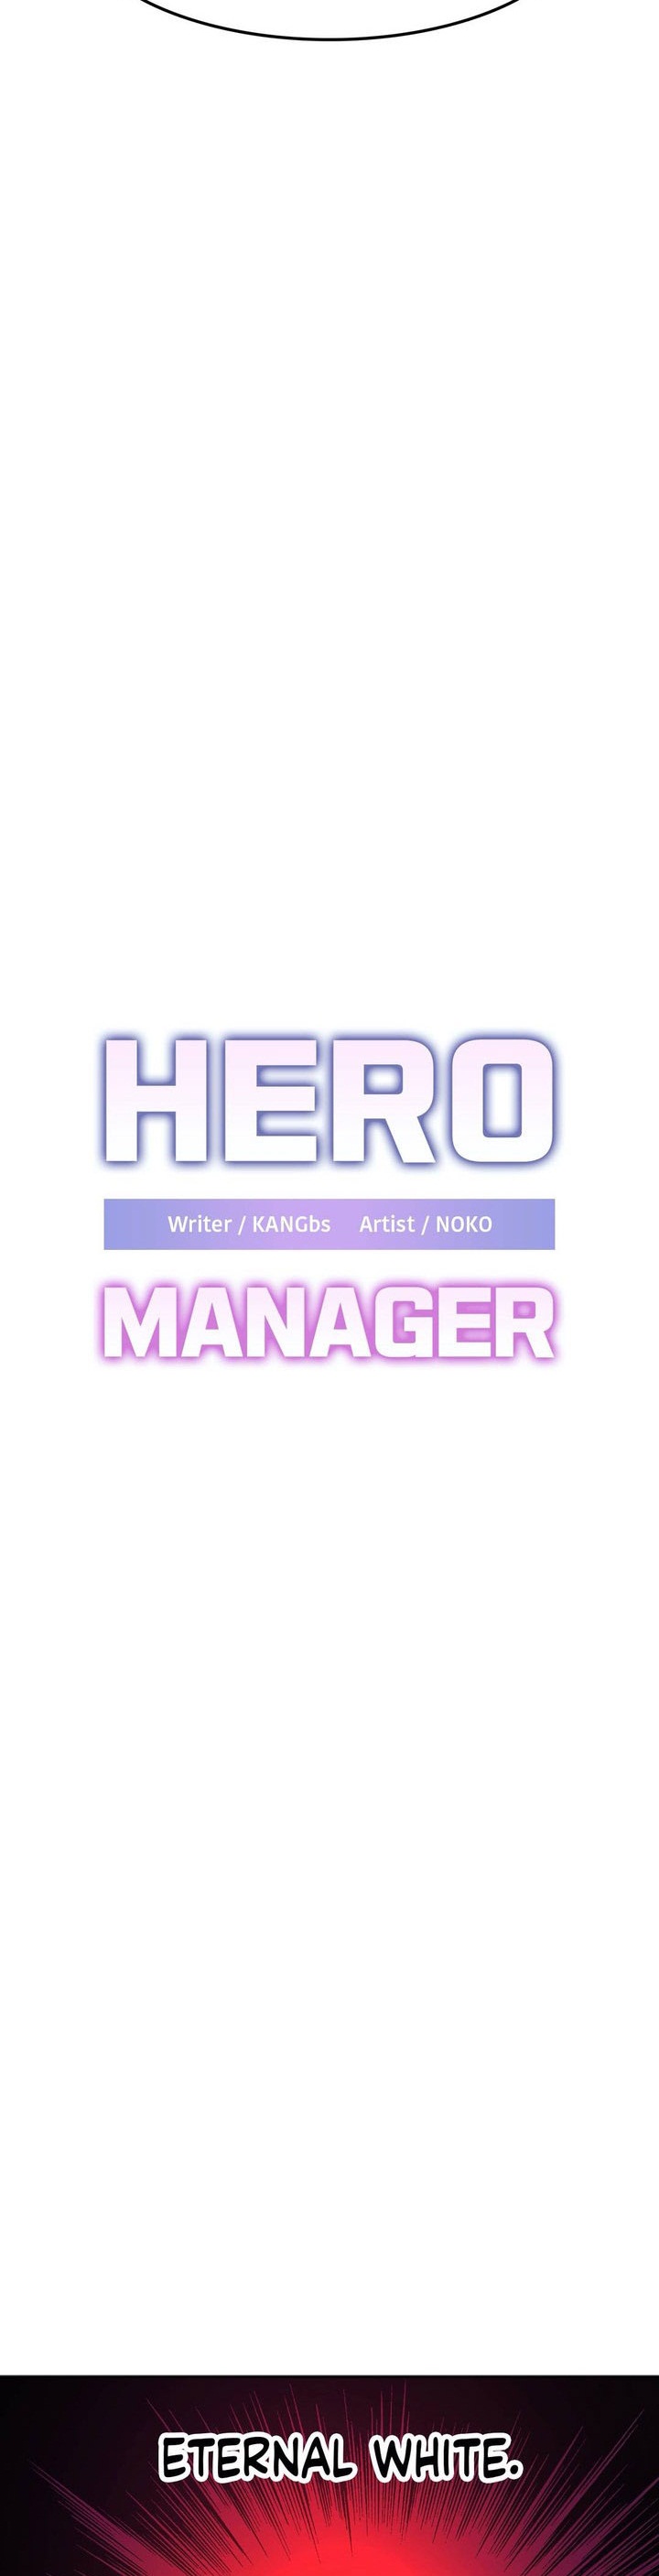 Hero Manager 22 (10)